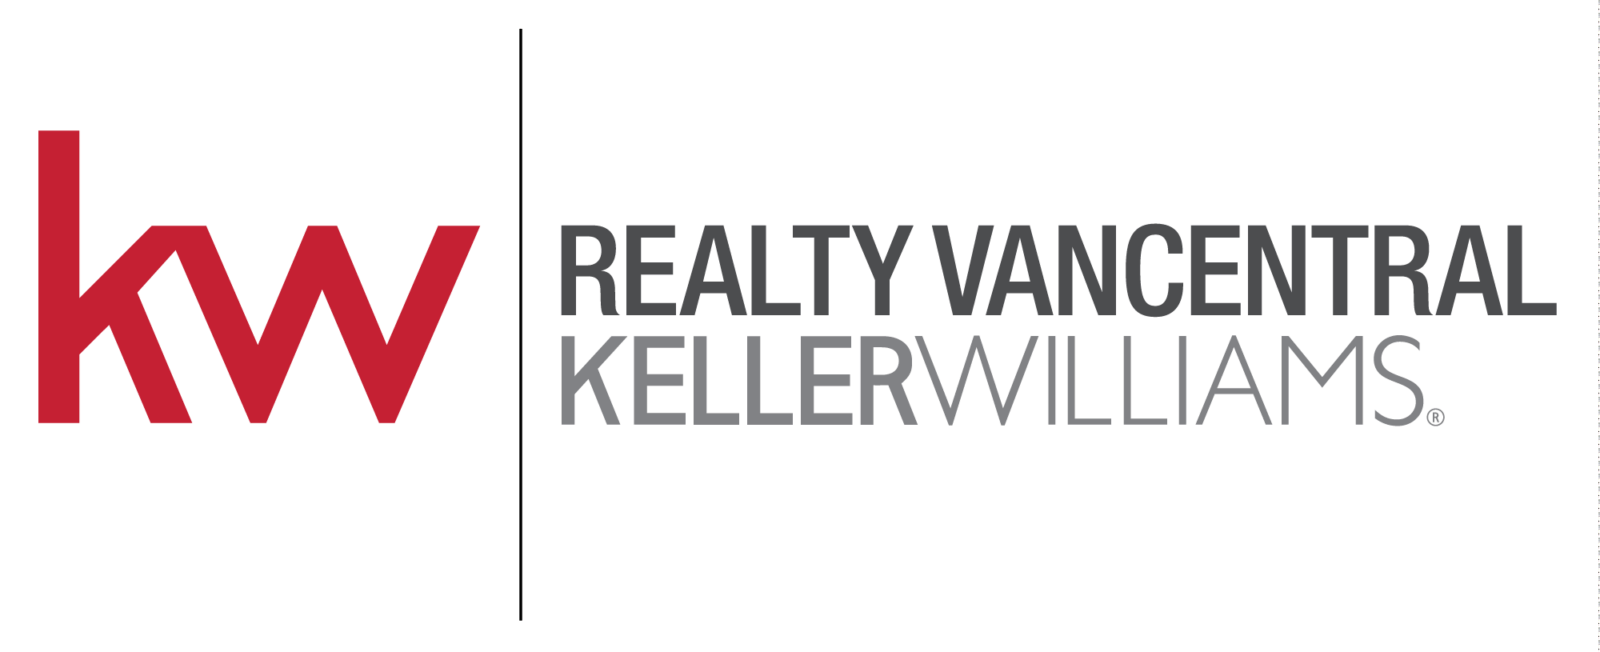 Keller Williams Realty VanCentral